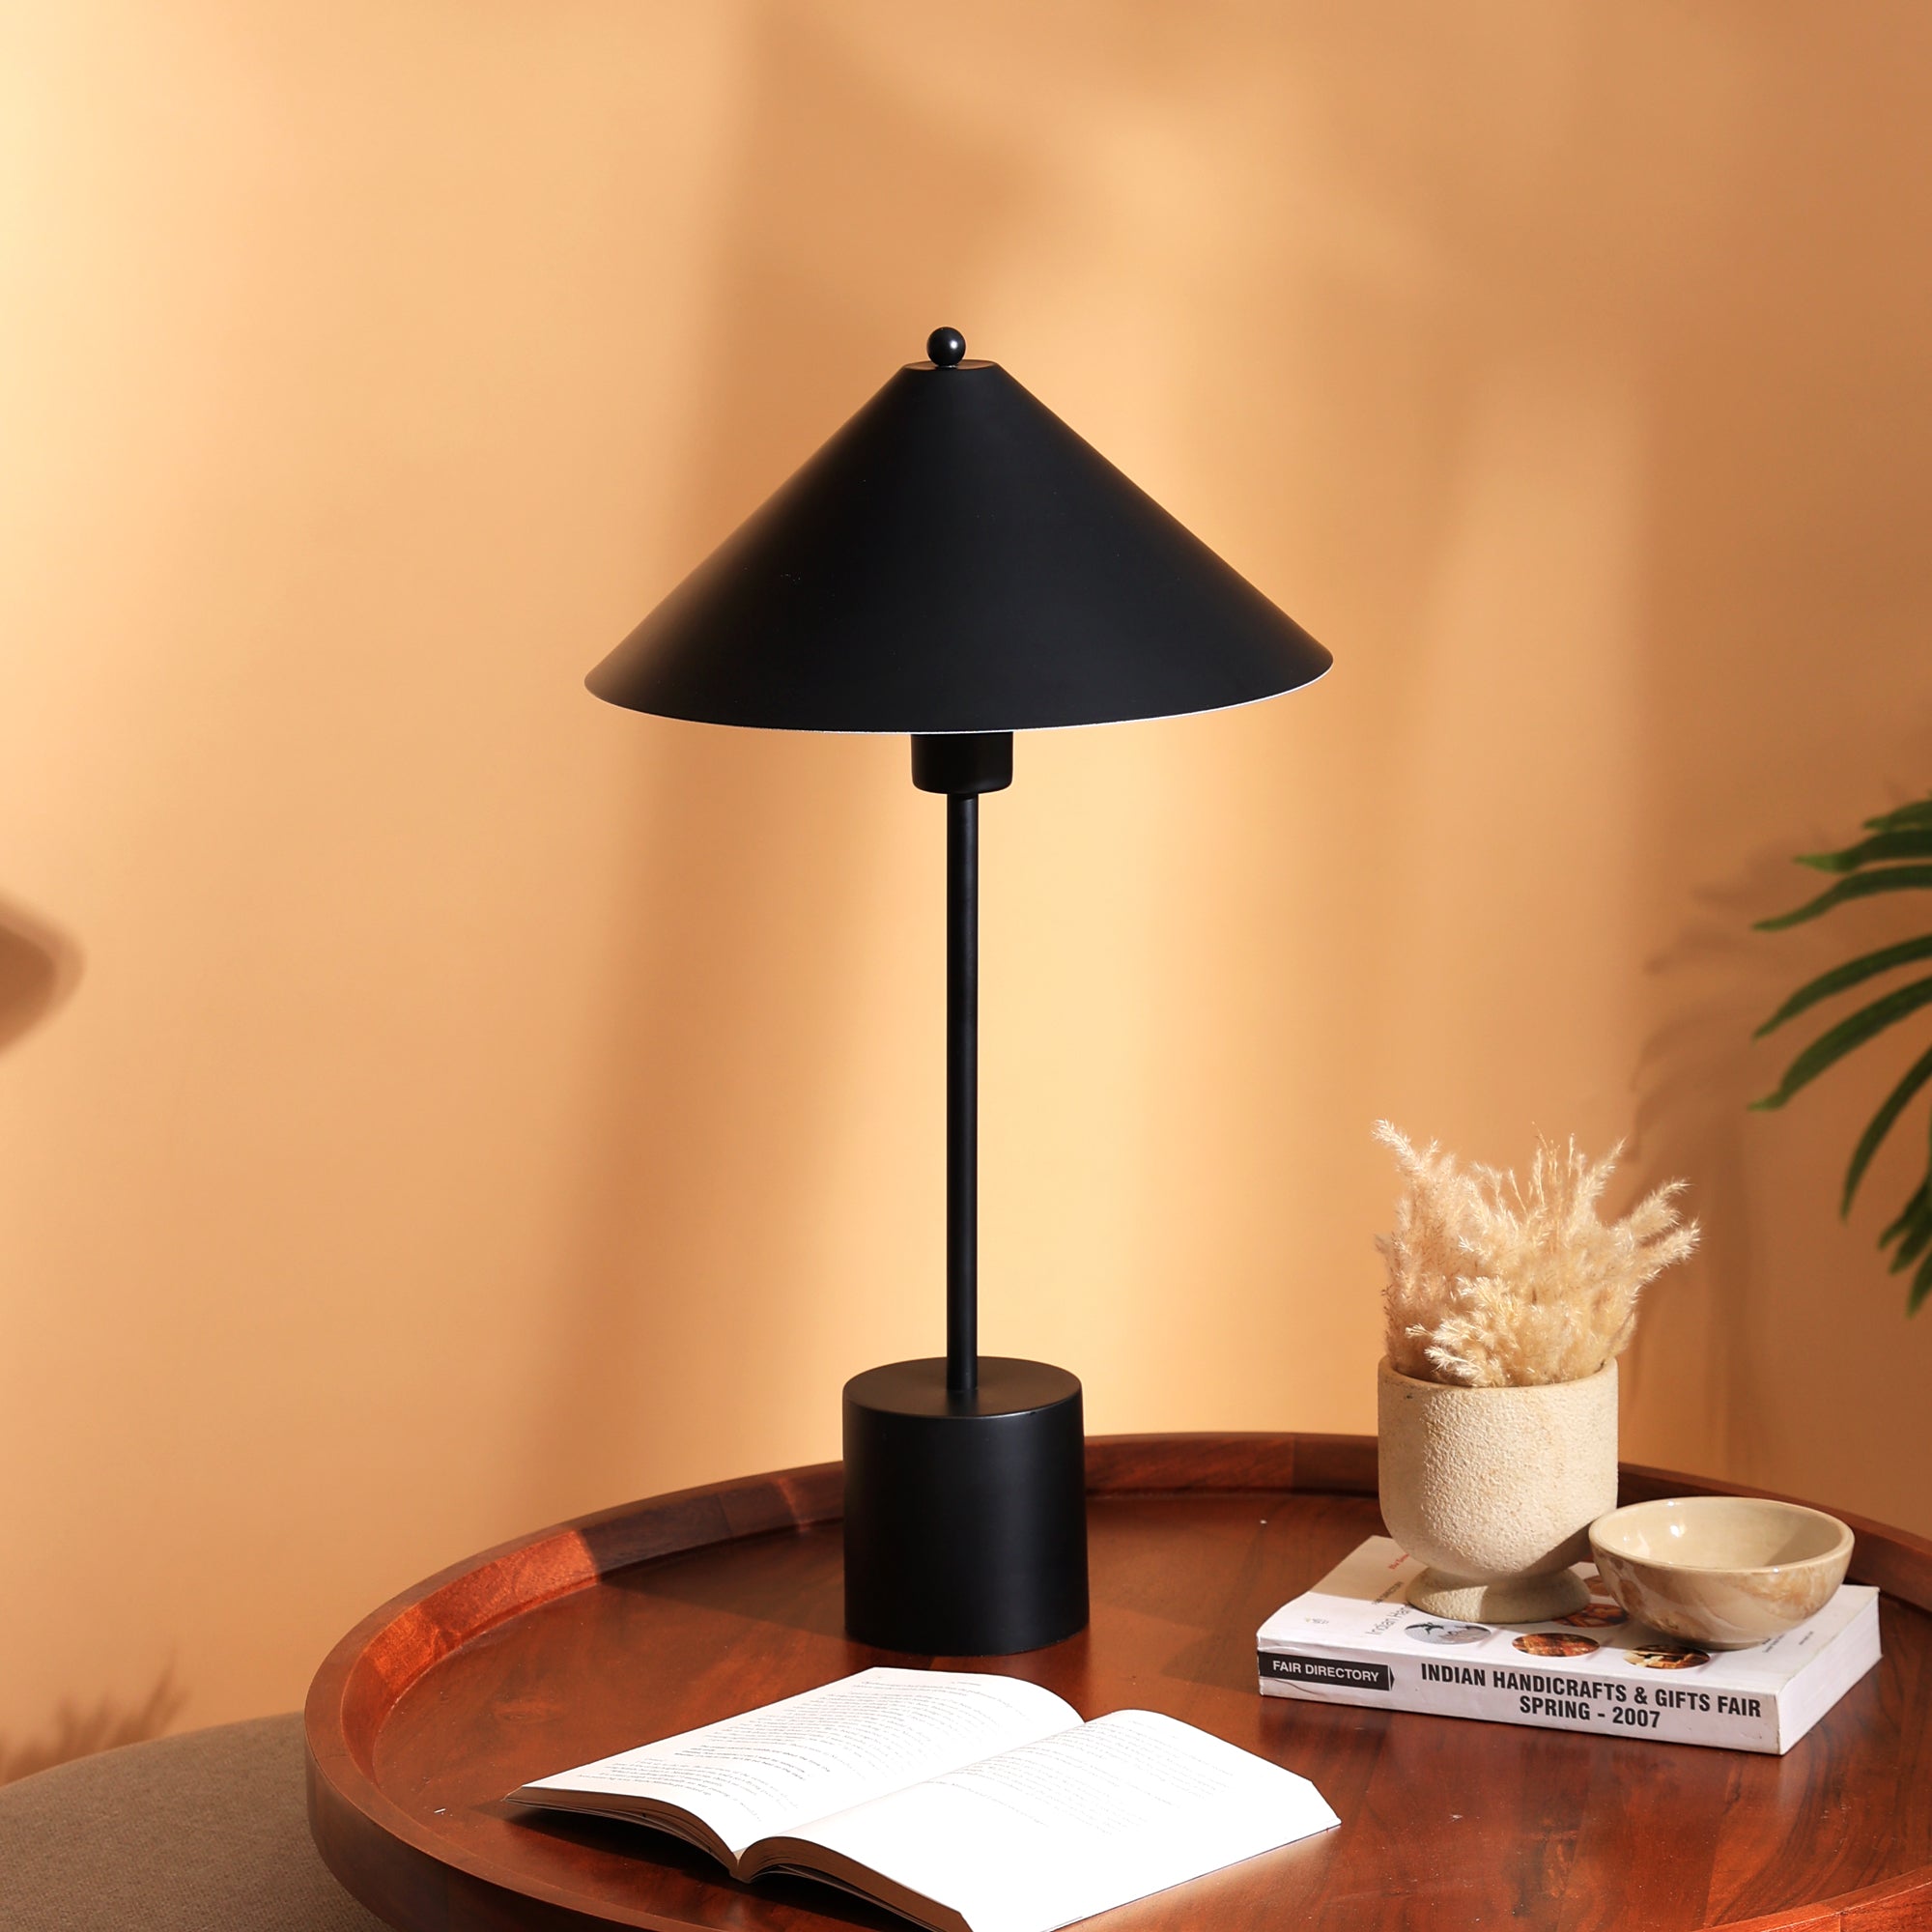 Casa 100 - Table Lamp - Modern Scandinavian Design, Premium Metallic Finish, Easy Installation